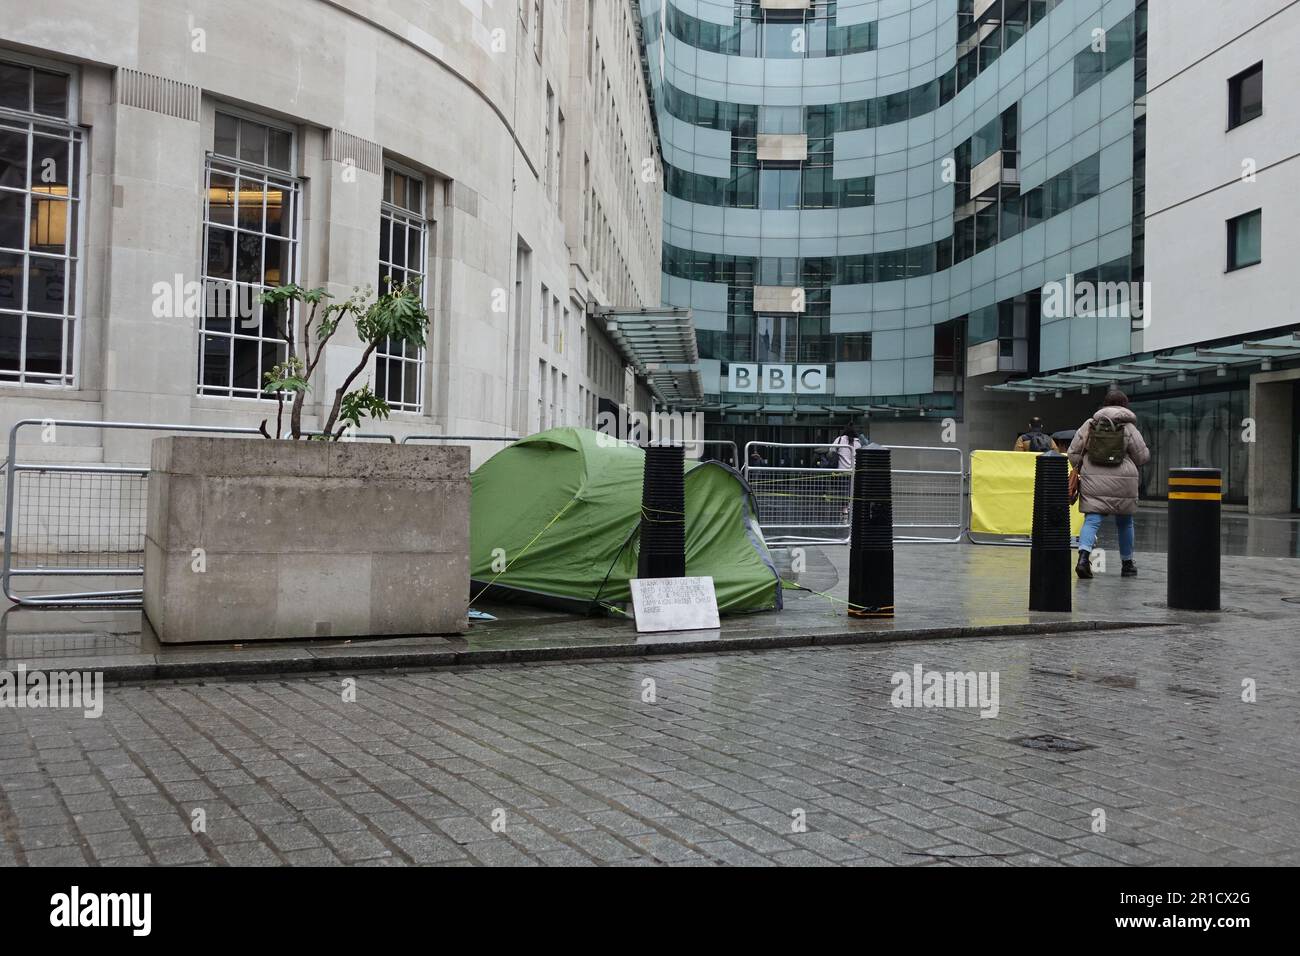 Protestzelt vor dem BBC London UK Broadcasting House Stockfoto